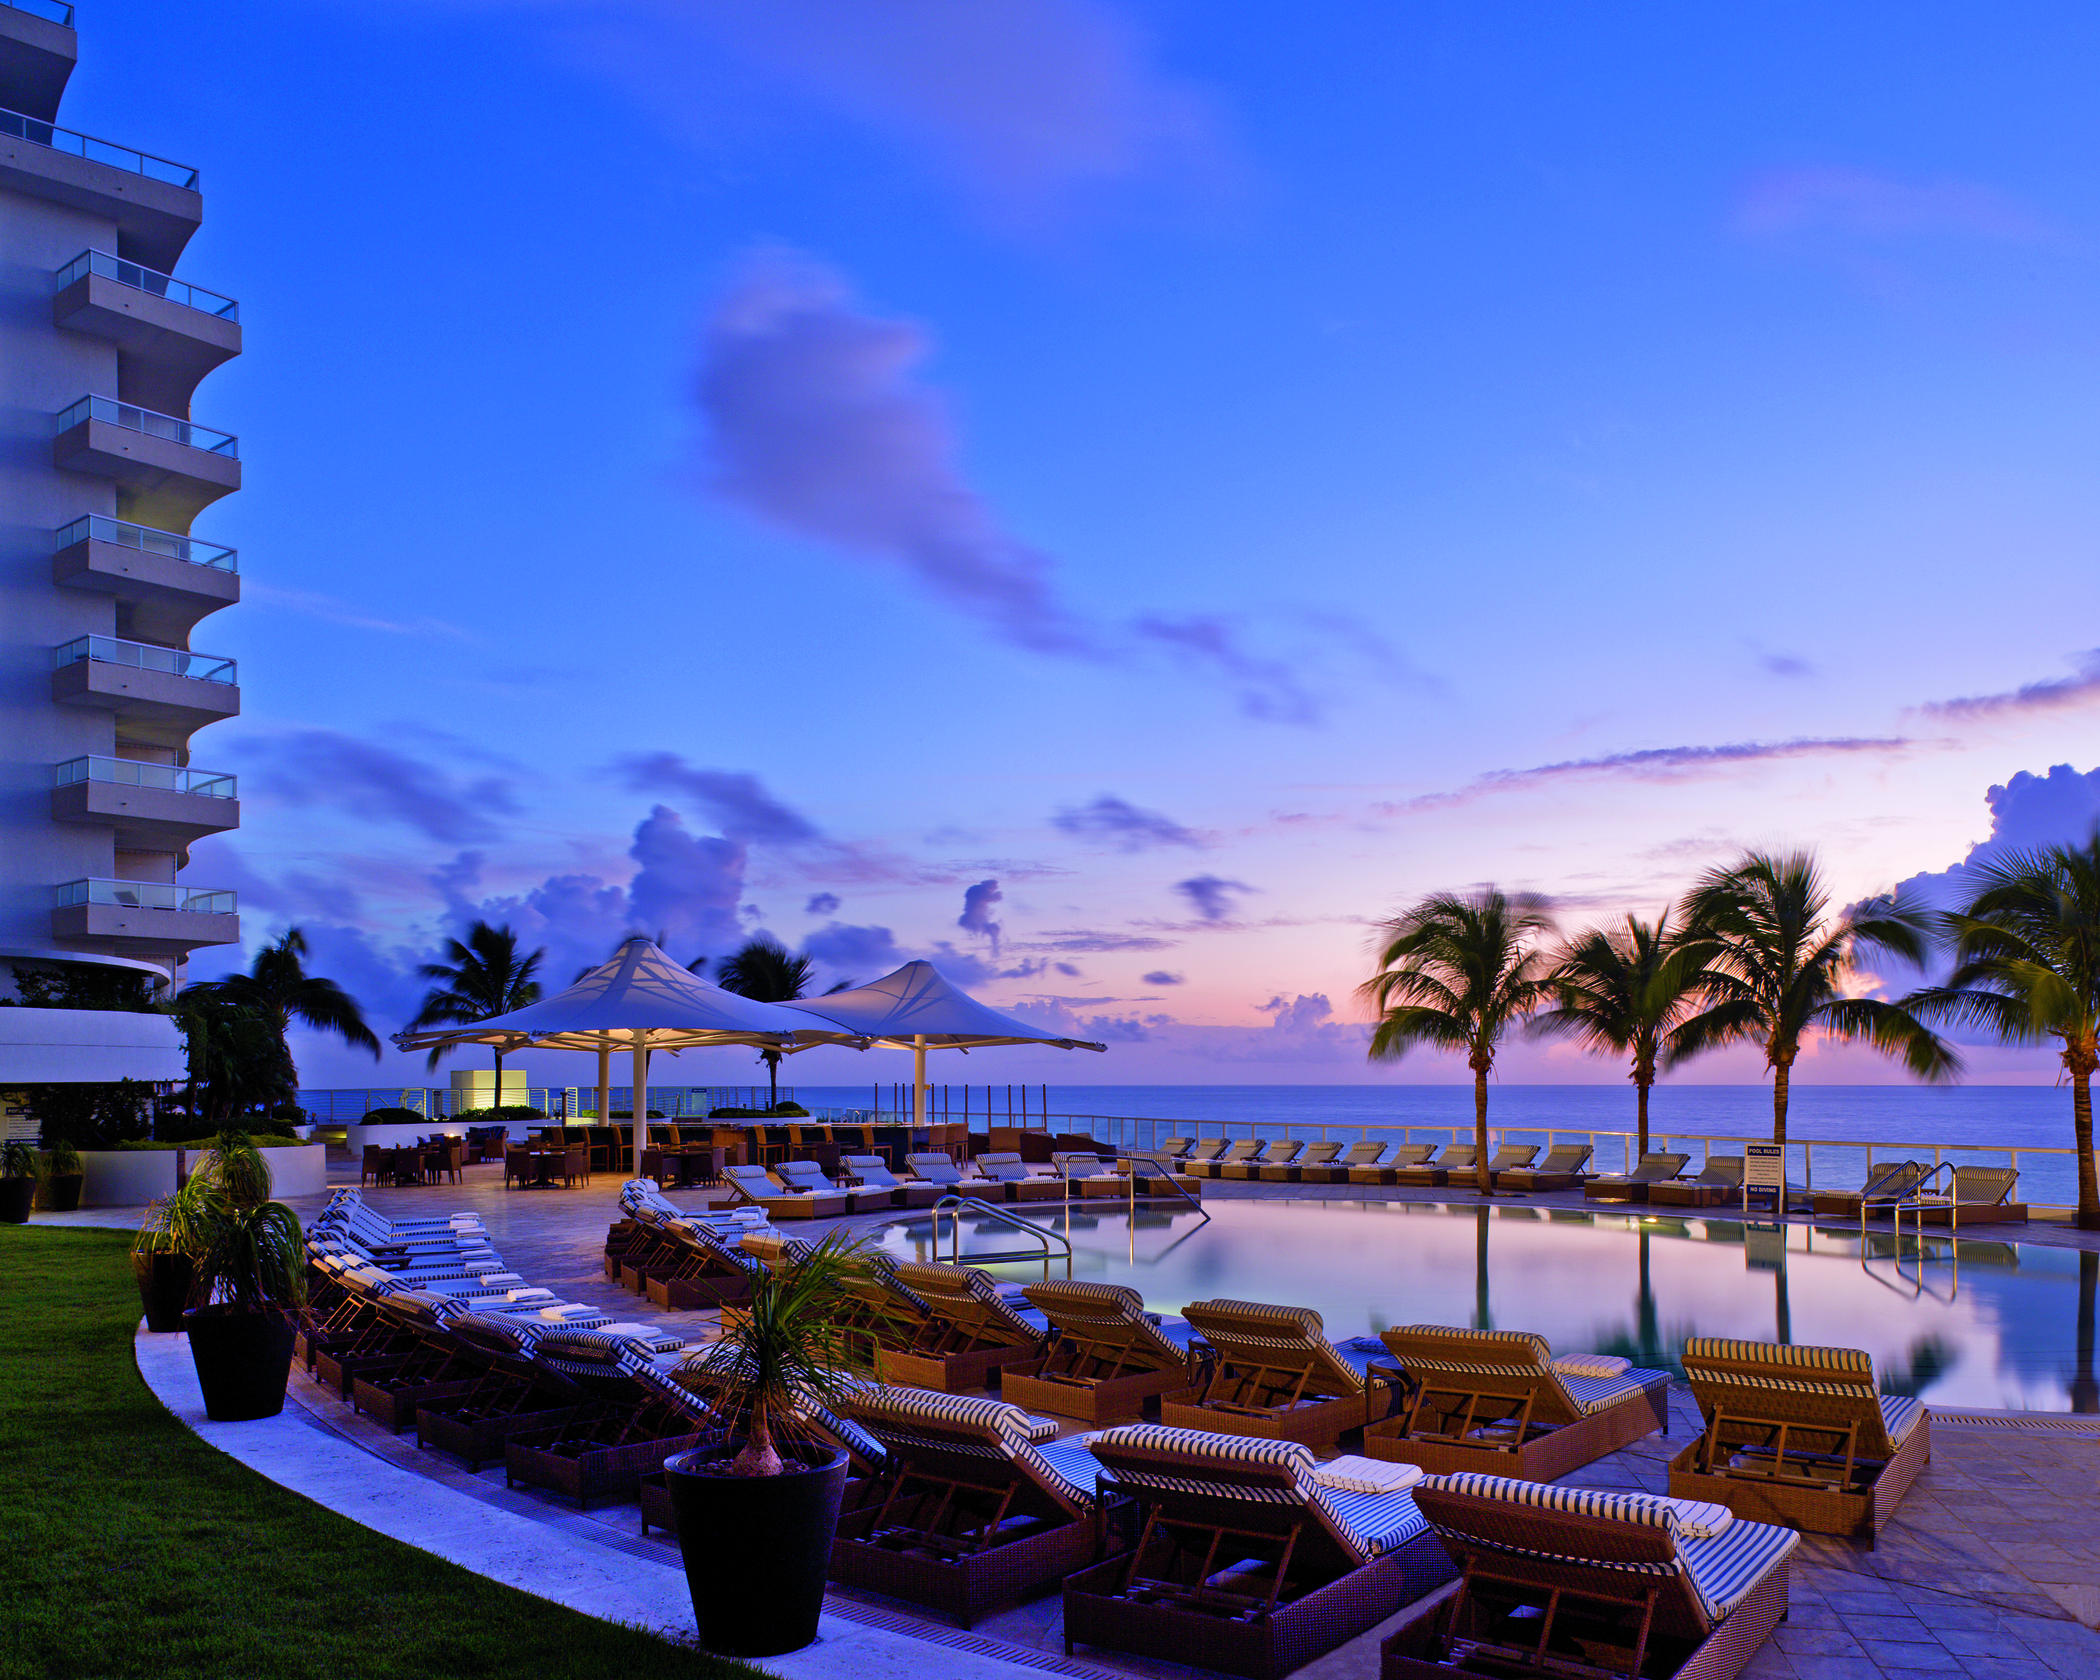 Ritz-Carlton Ft. Lauderdale Offers Oceanfront Elegance